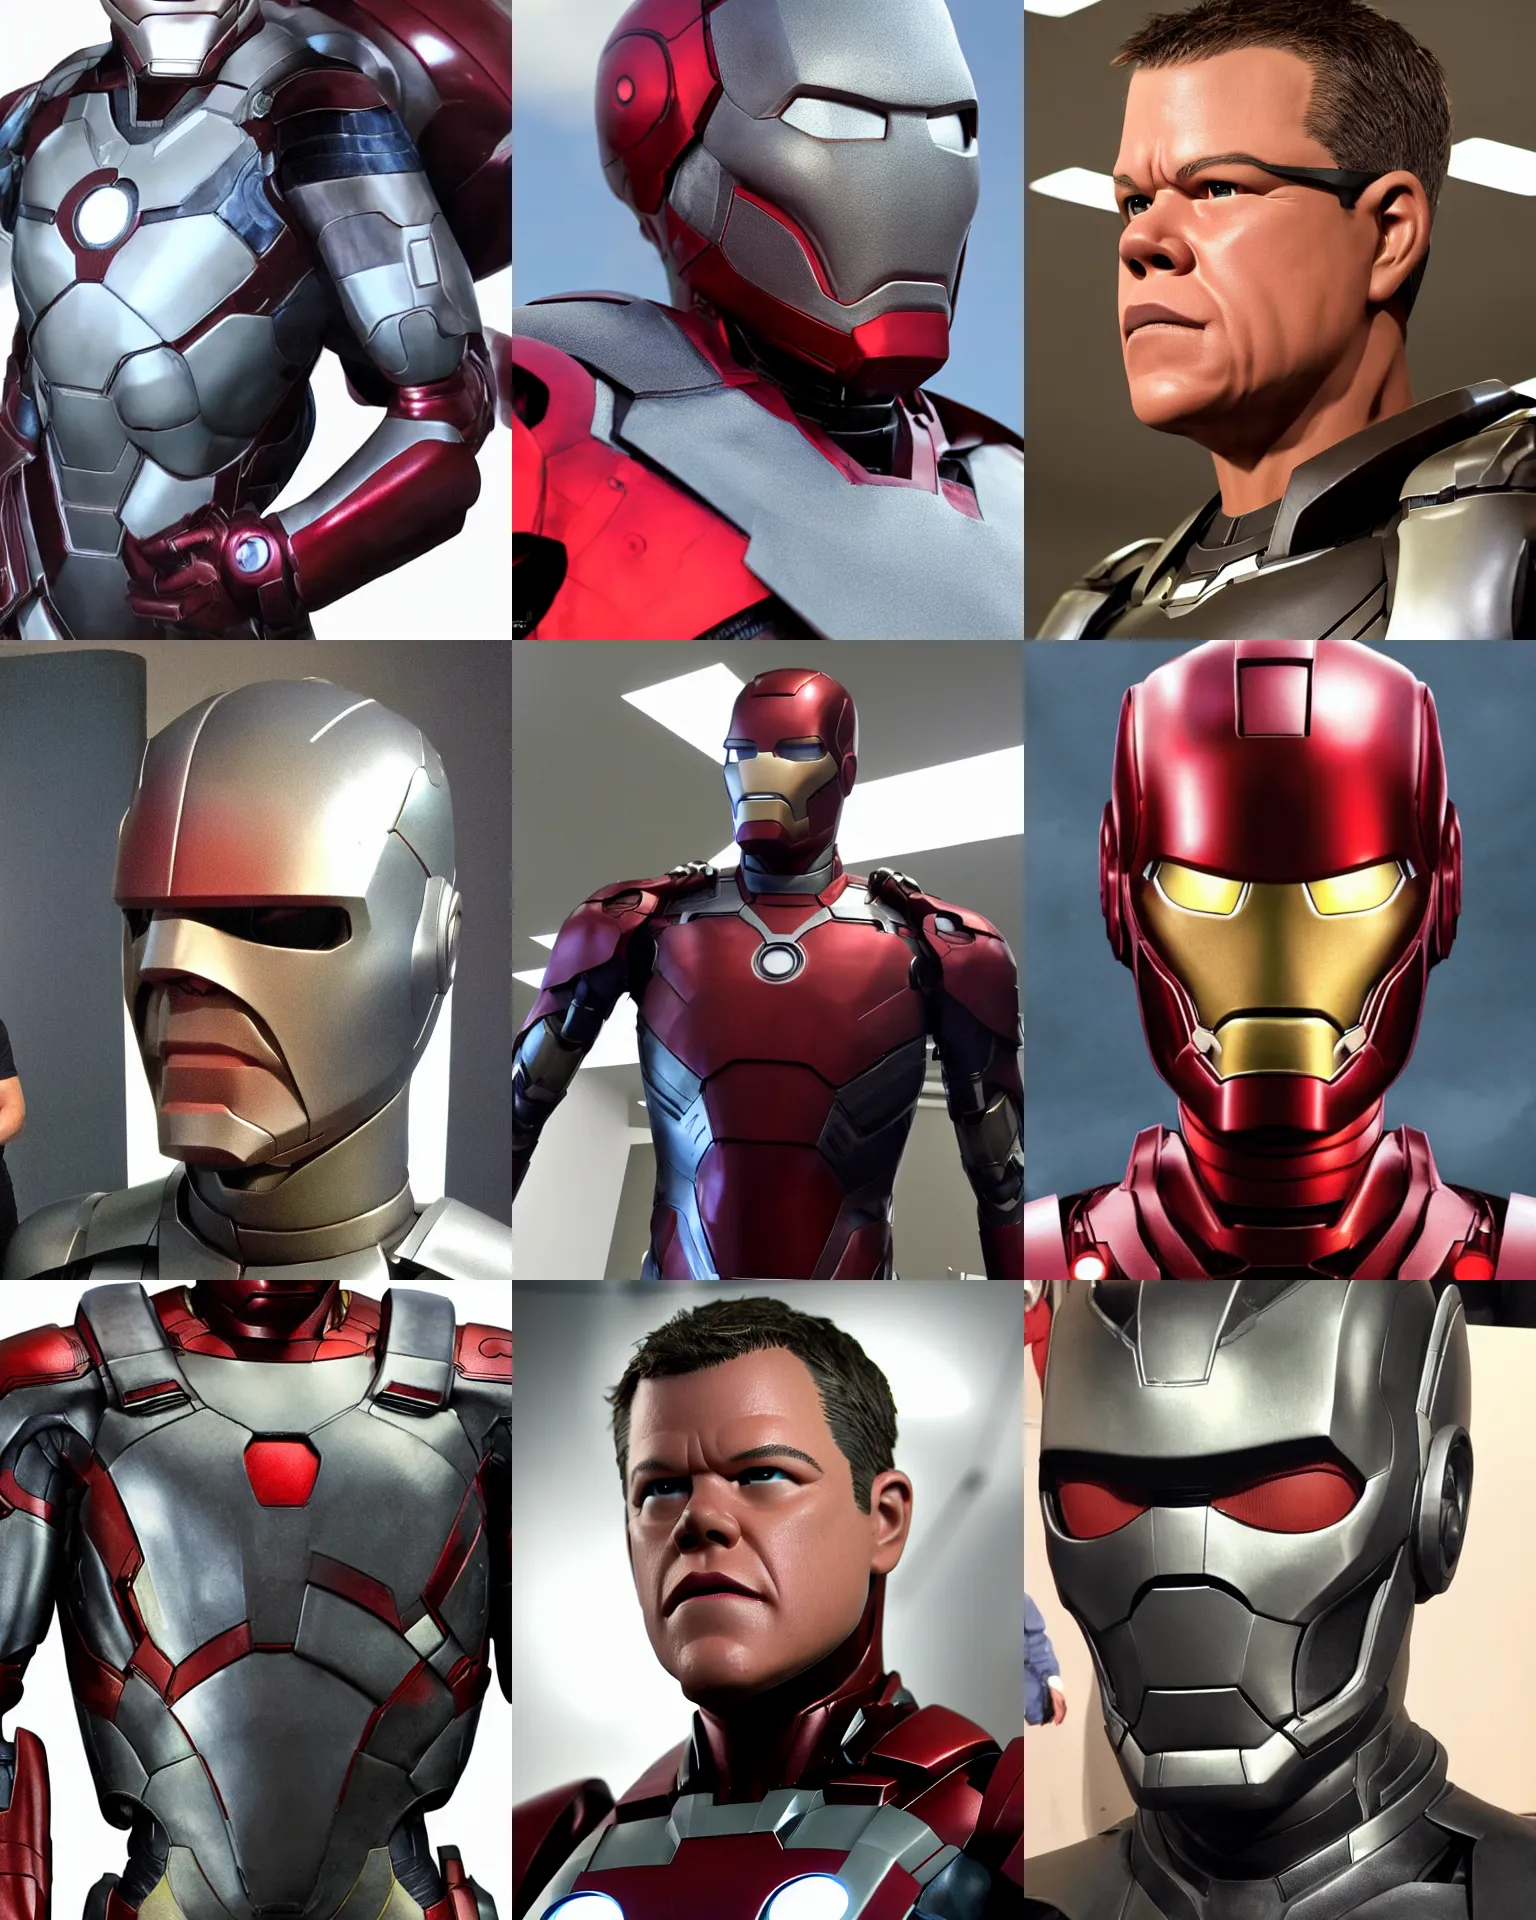 Prompt: matt damon ironman suit very realistic medium shot close up from the avengers